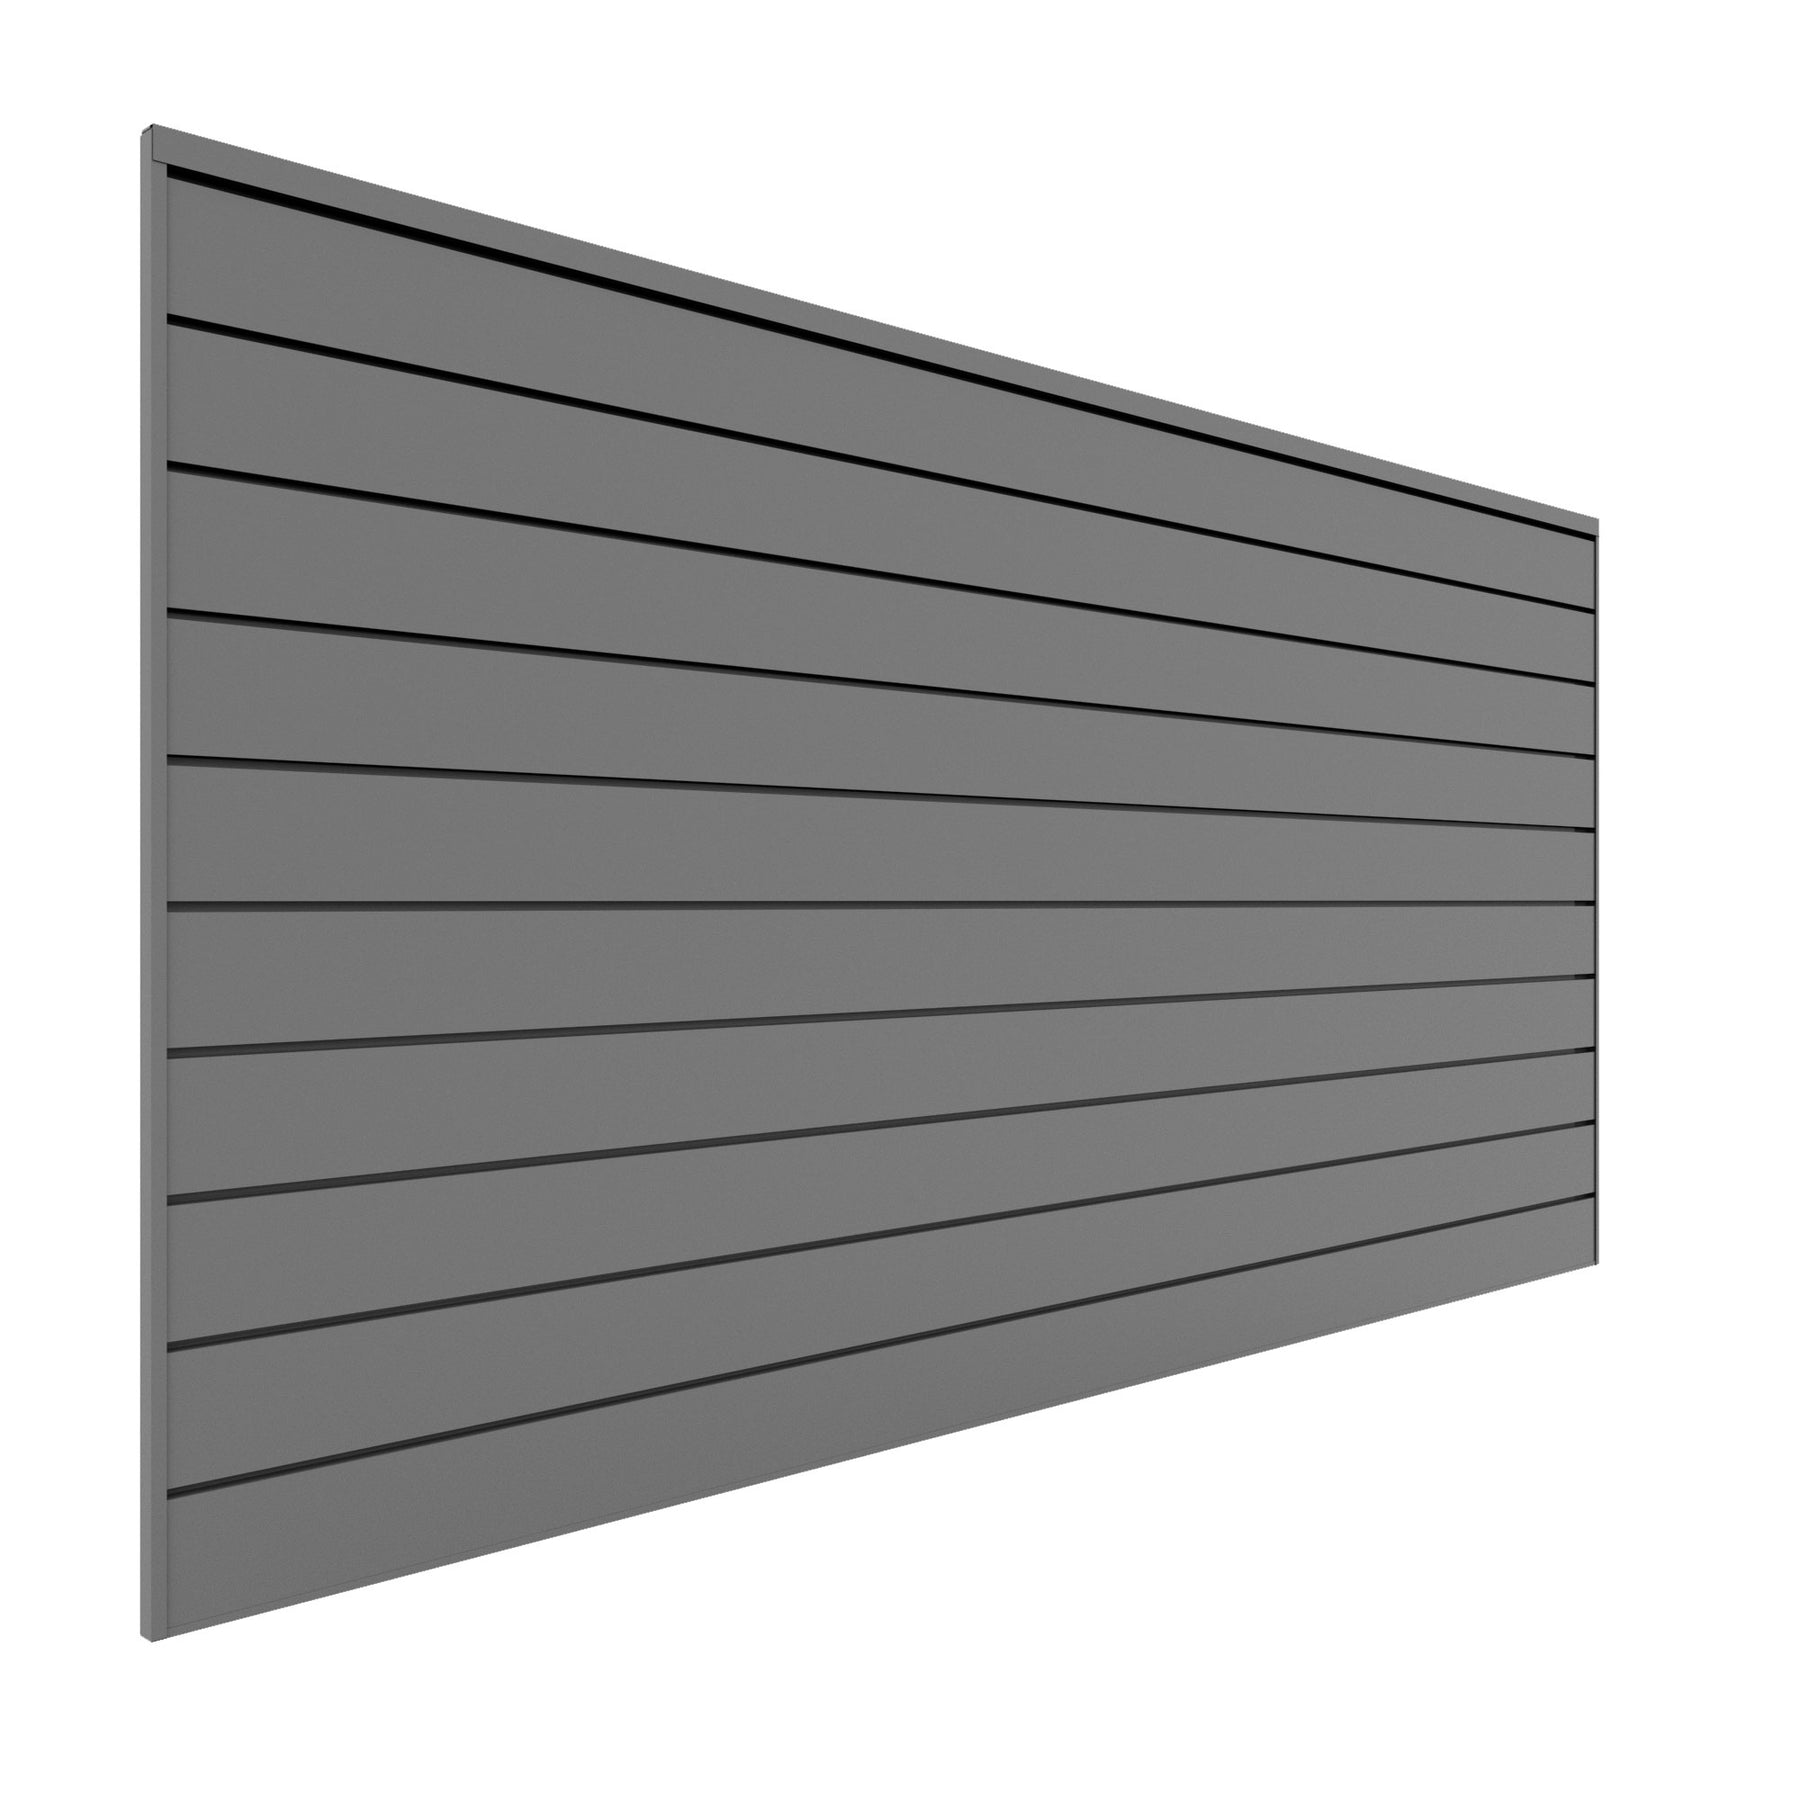 Proslat PVC Slatwall Panels - The Versatile and Durable Choice